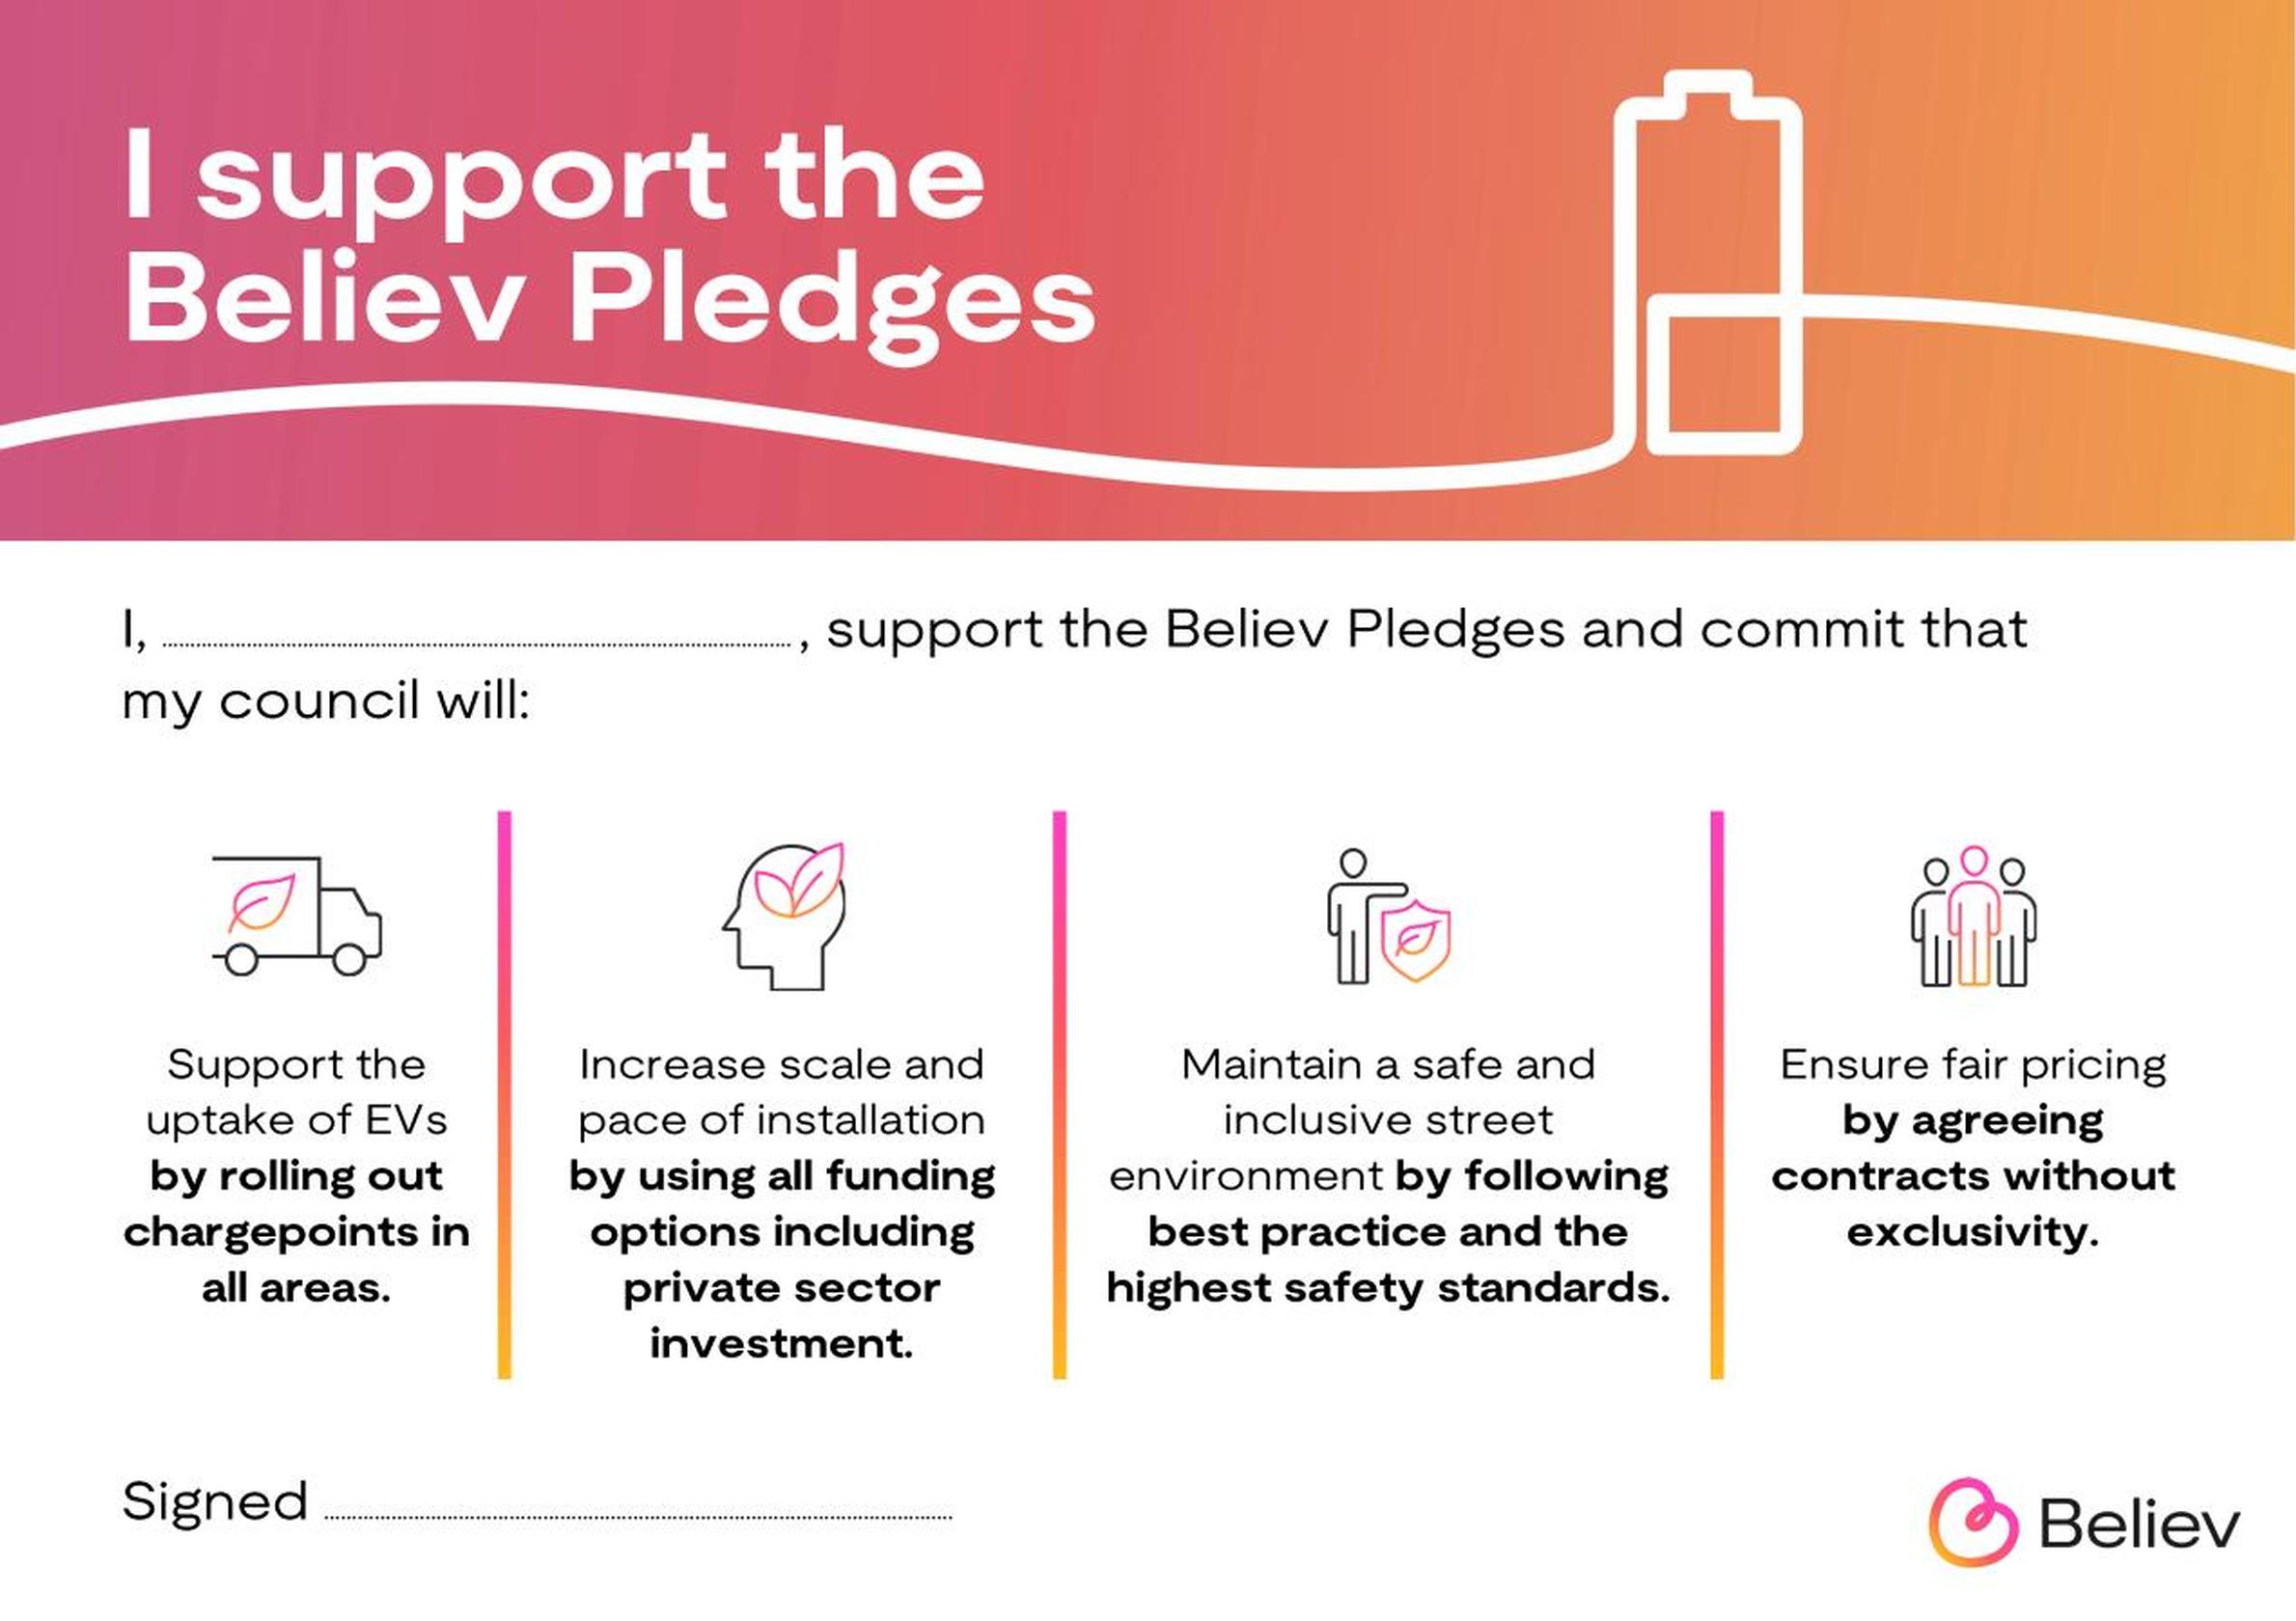 The Believ pledge card